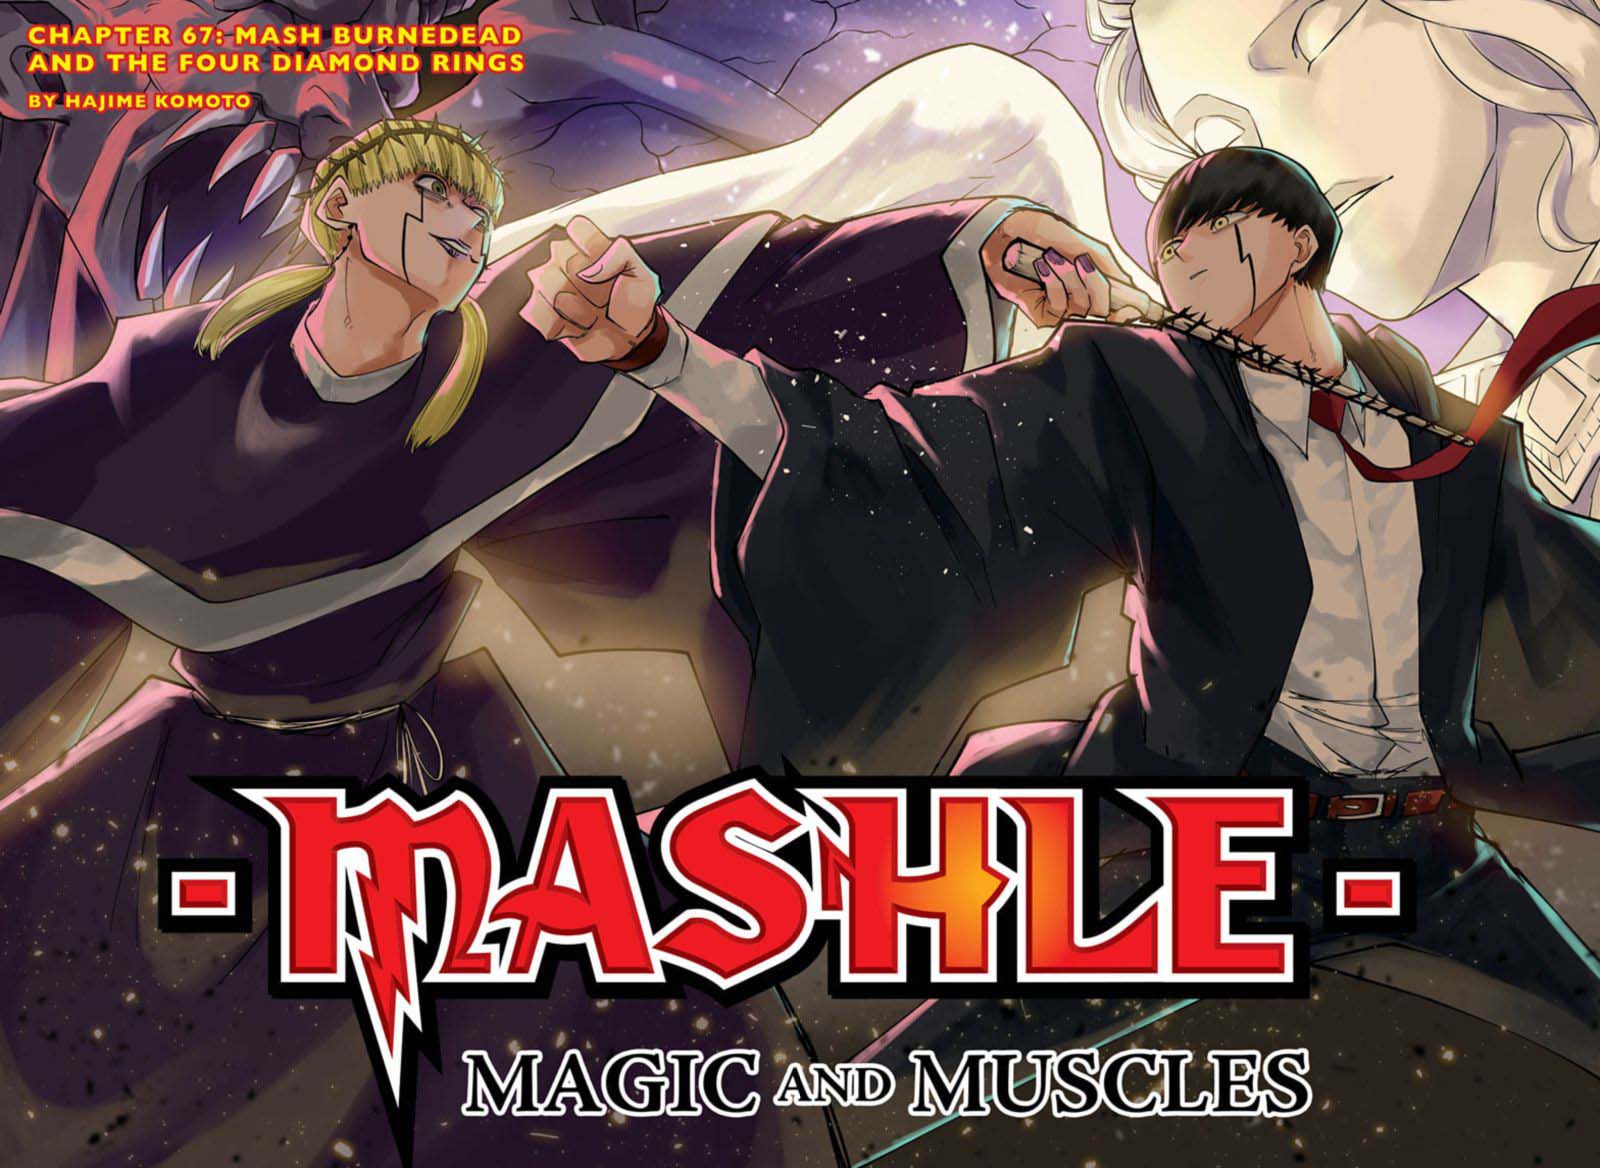 mashle_magic_and_muscles_67_2